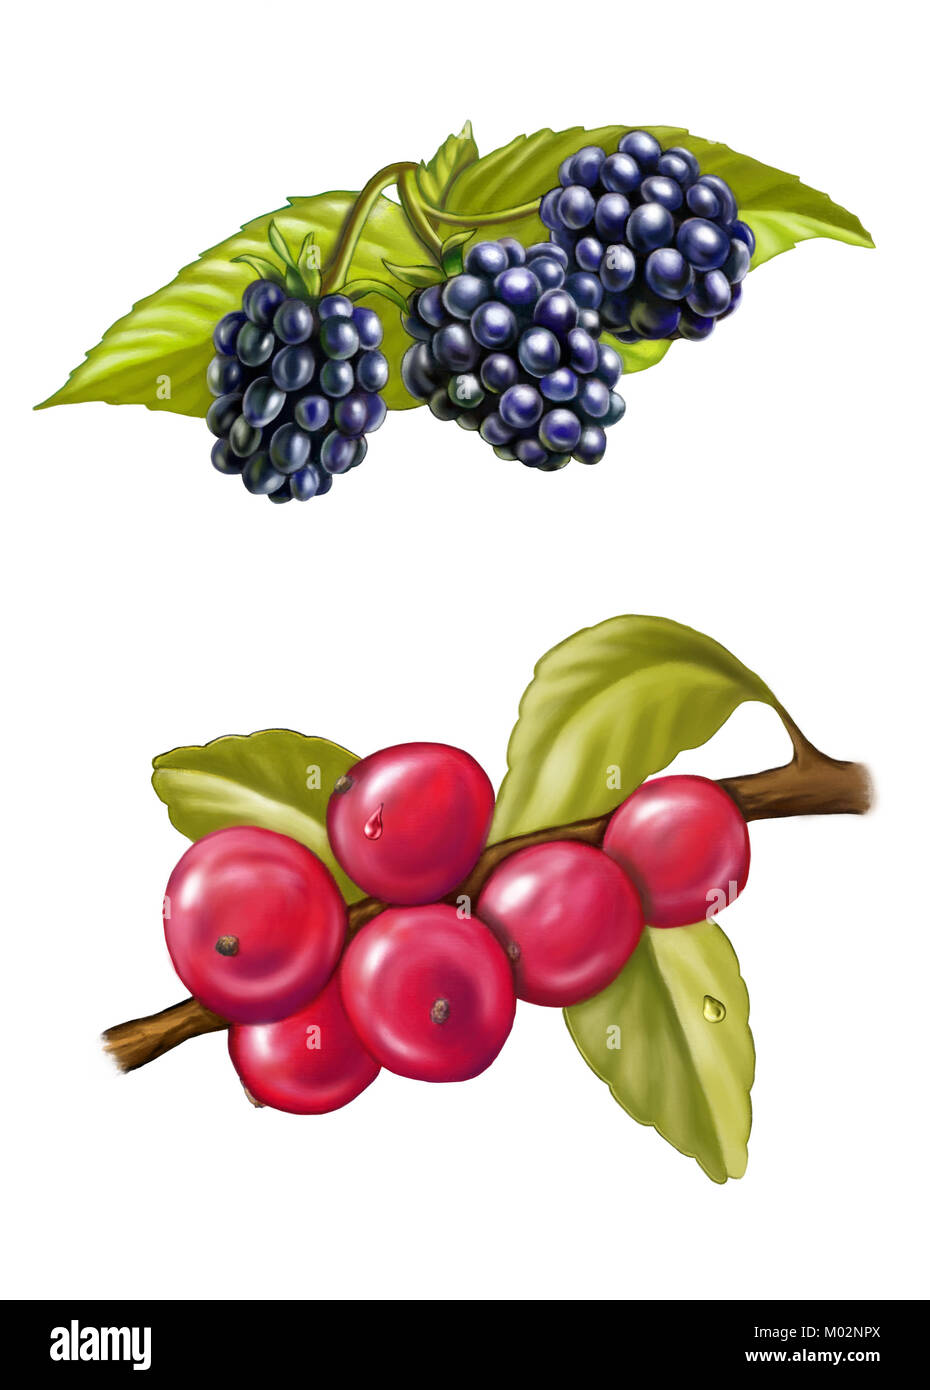 Blackberries and redberries. Digital illustration. Stock Photo